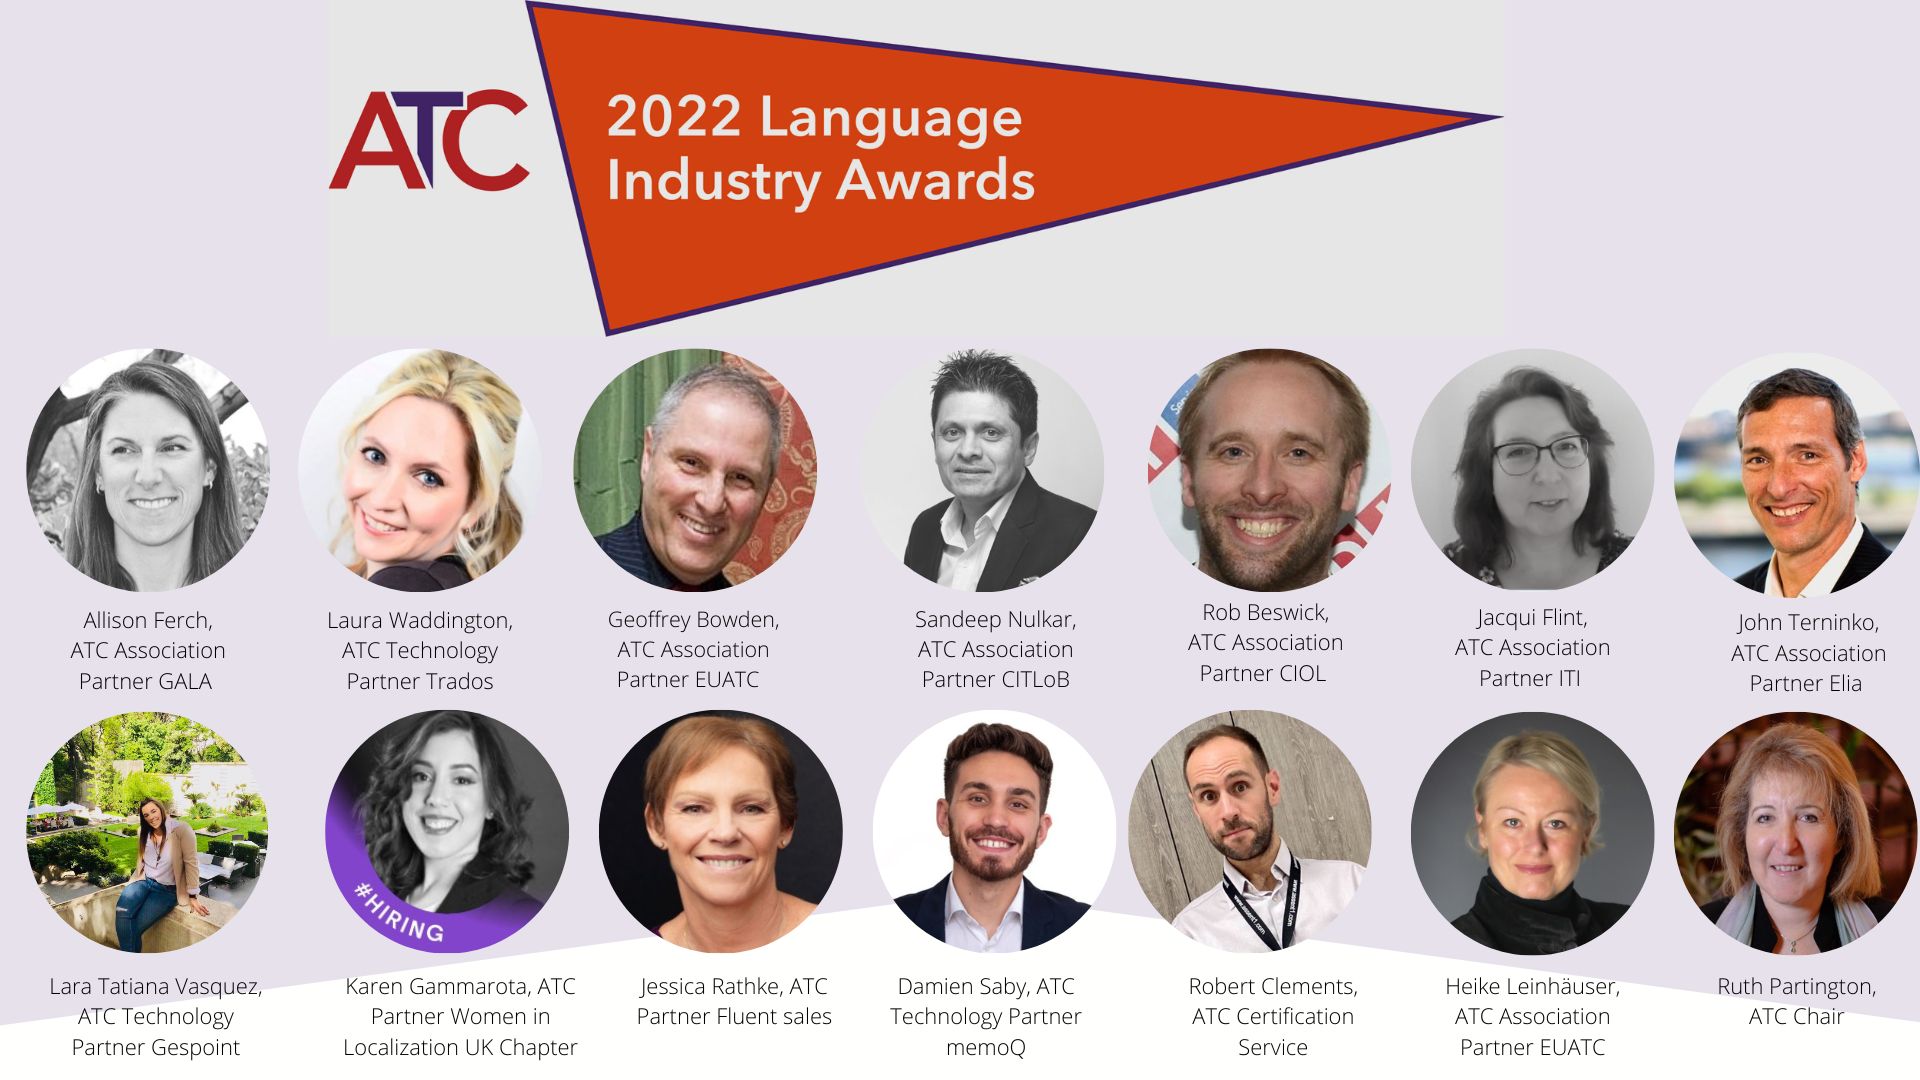 Meet the Judges of ATC Language Industry Awards 2022